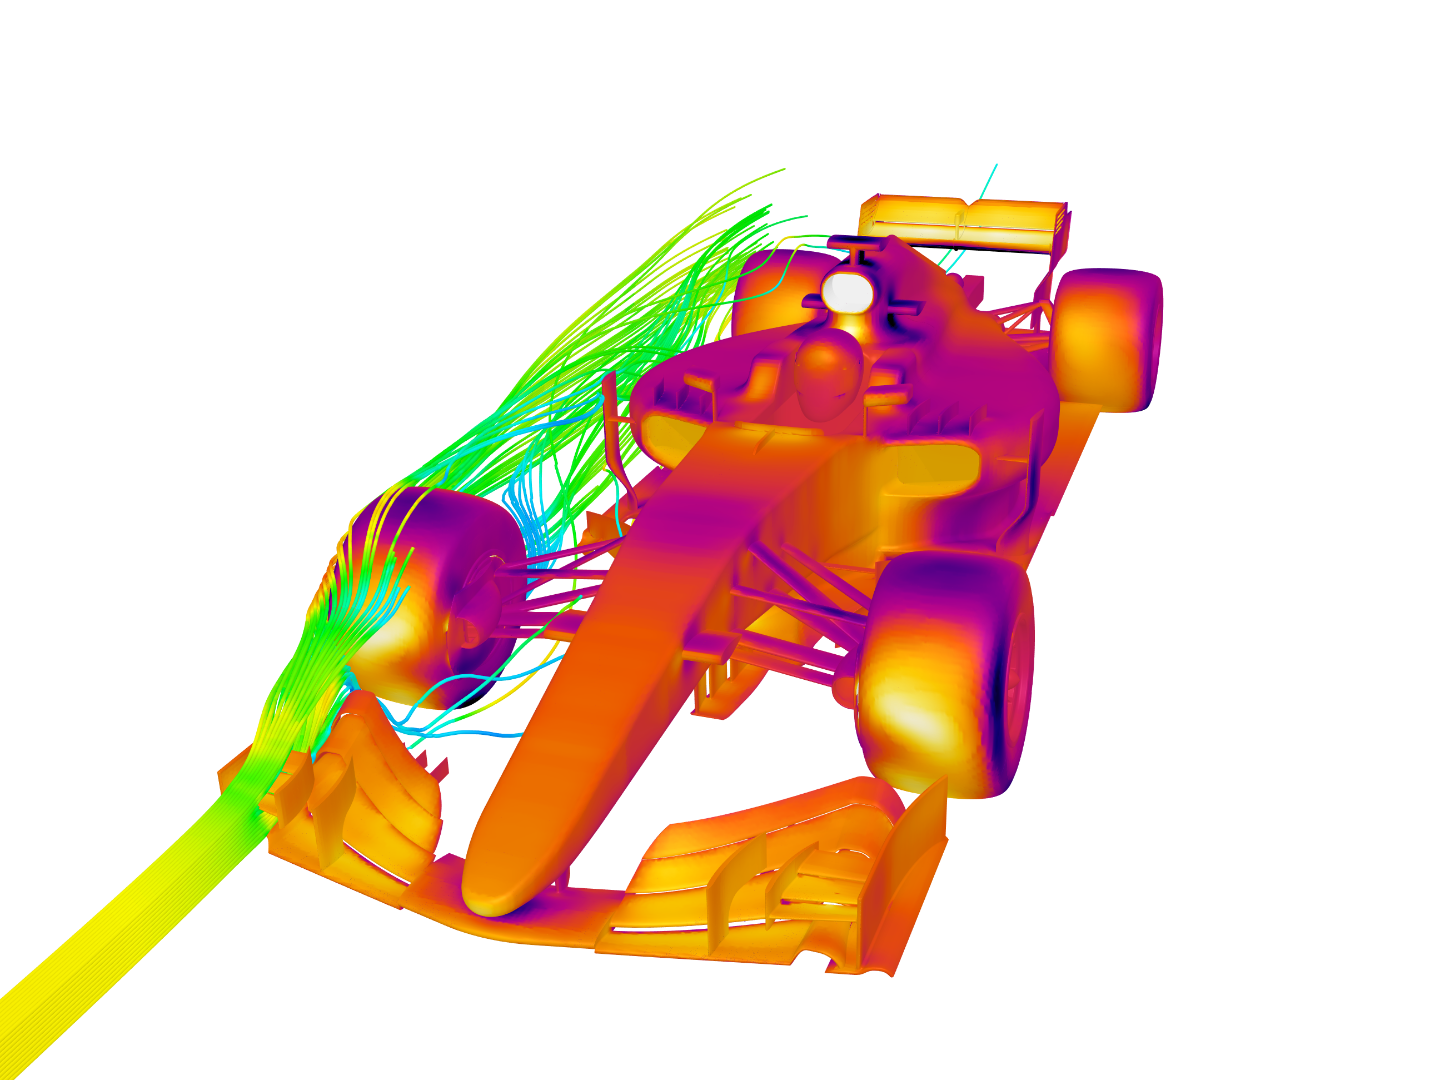 F1 flow image